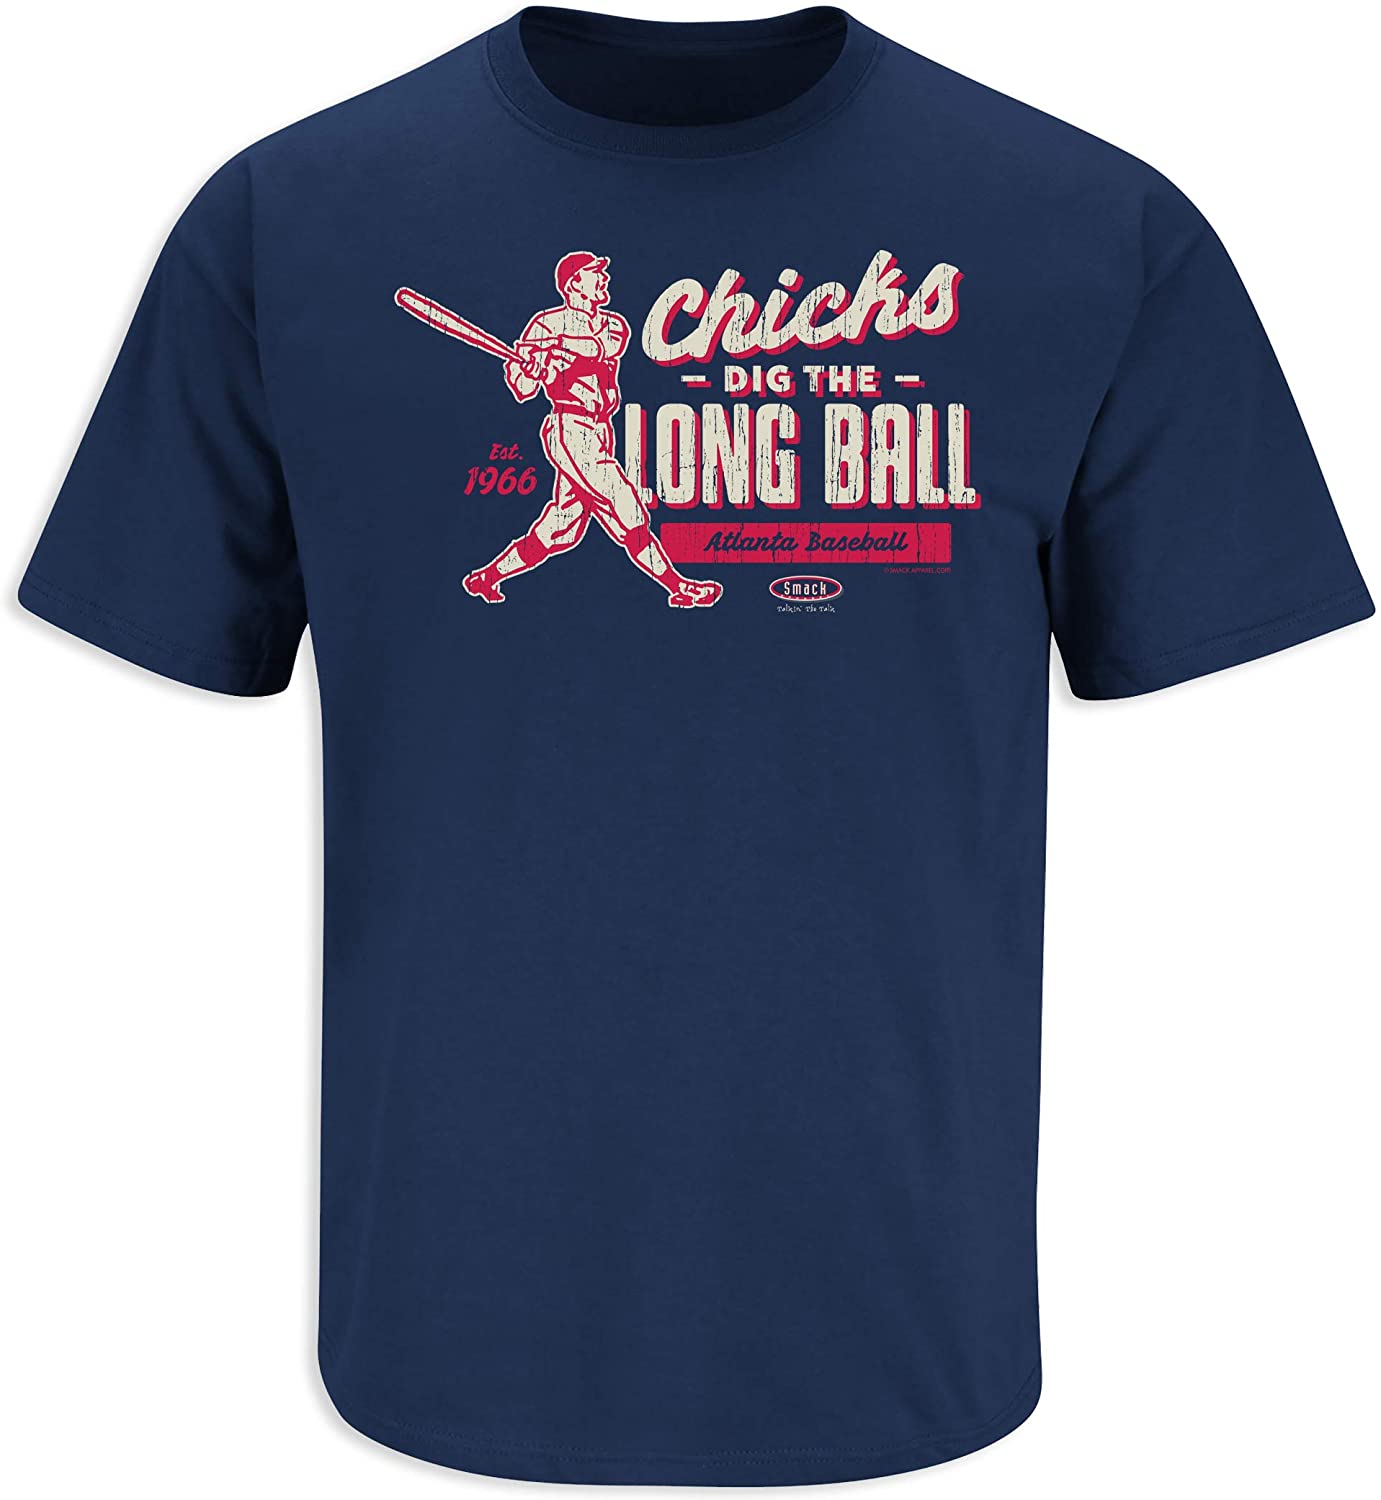 Chicks Dig the Long Ball Shirt for Atlanta Baseball Fans